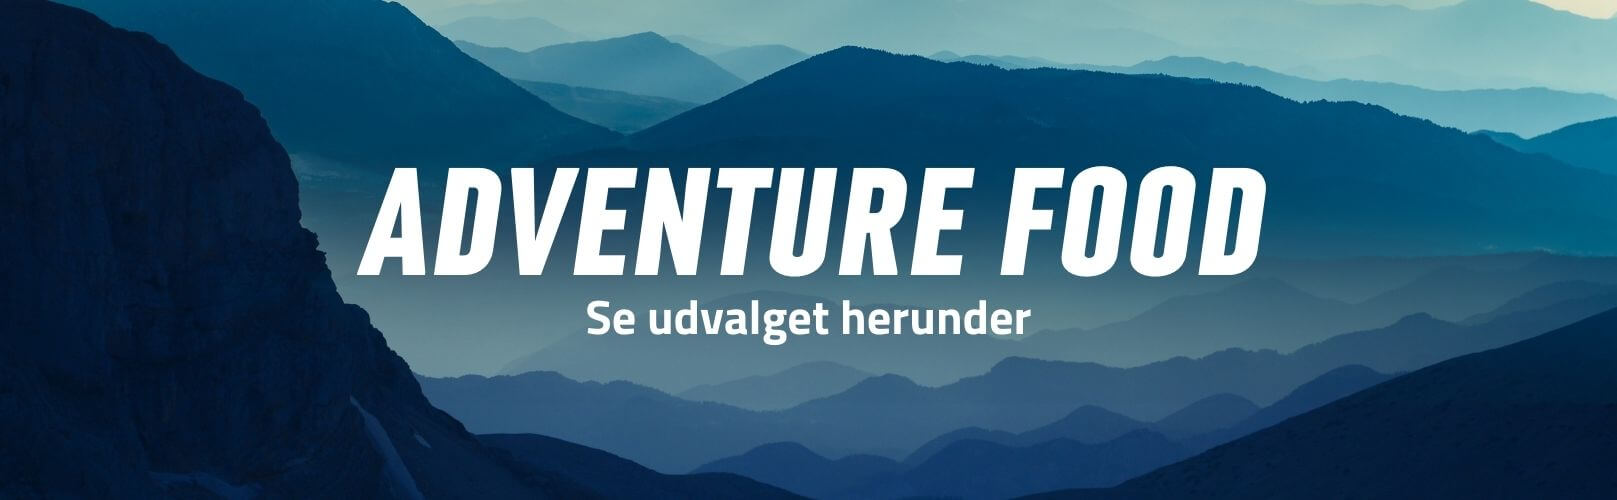 Adventure Food brand banner